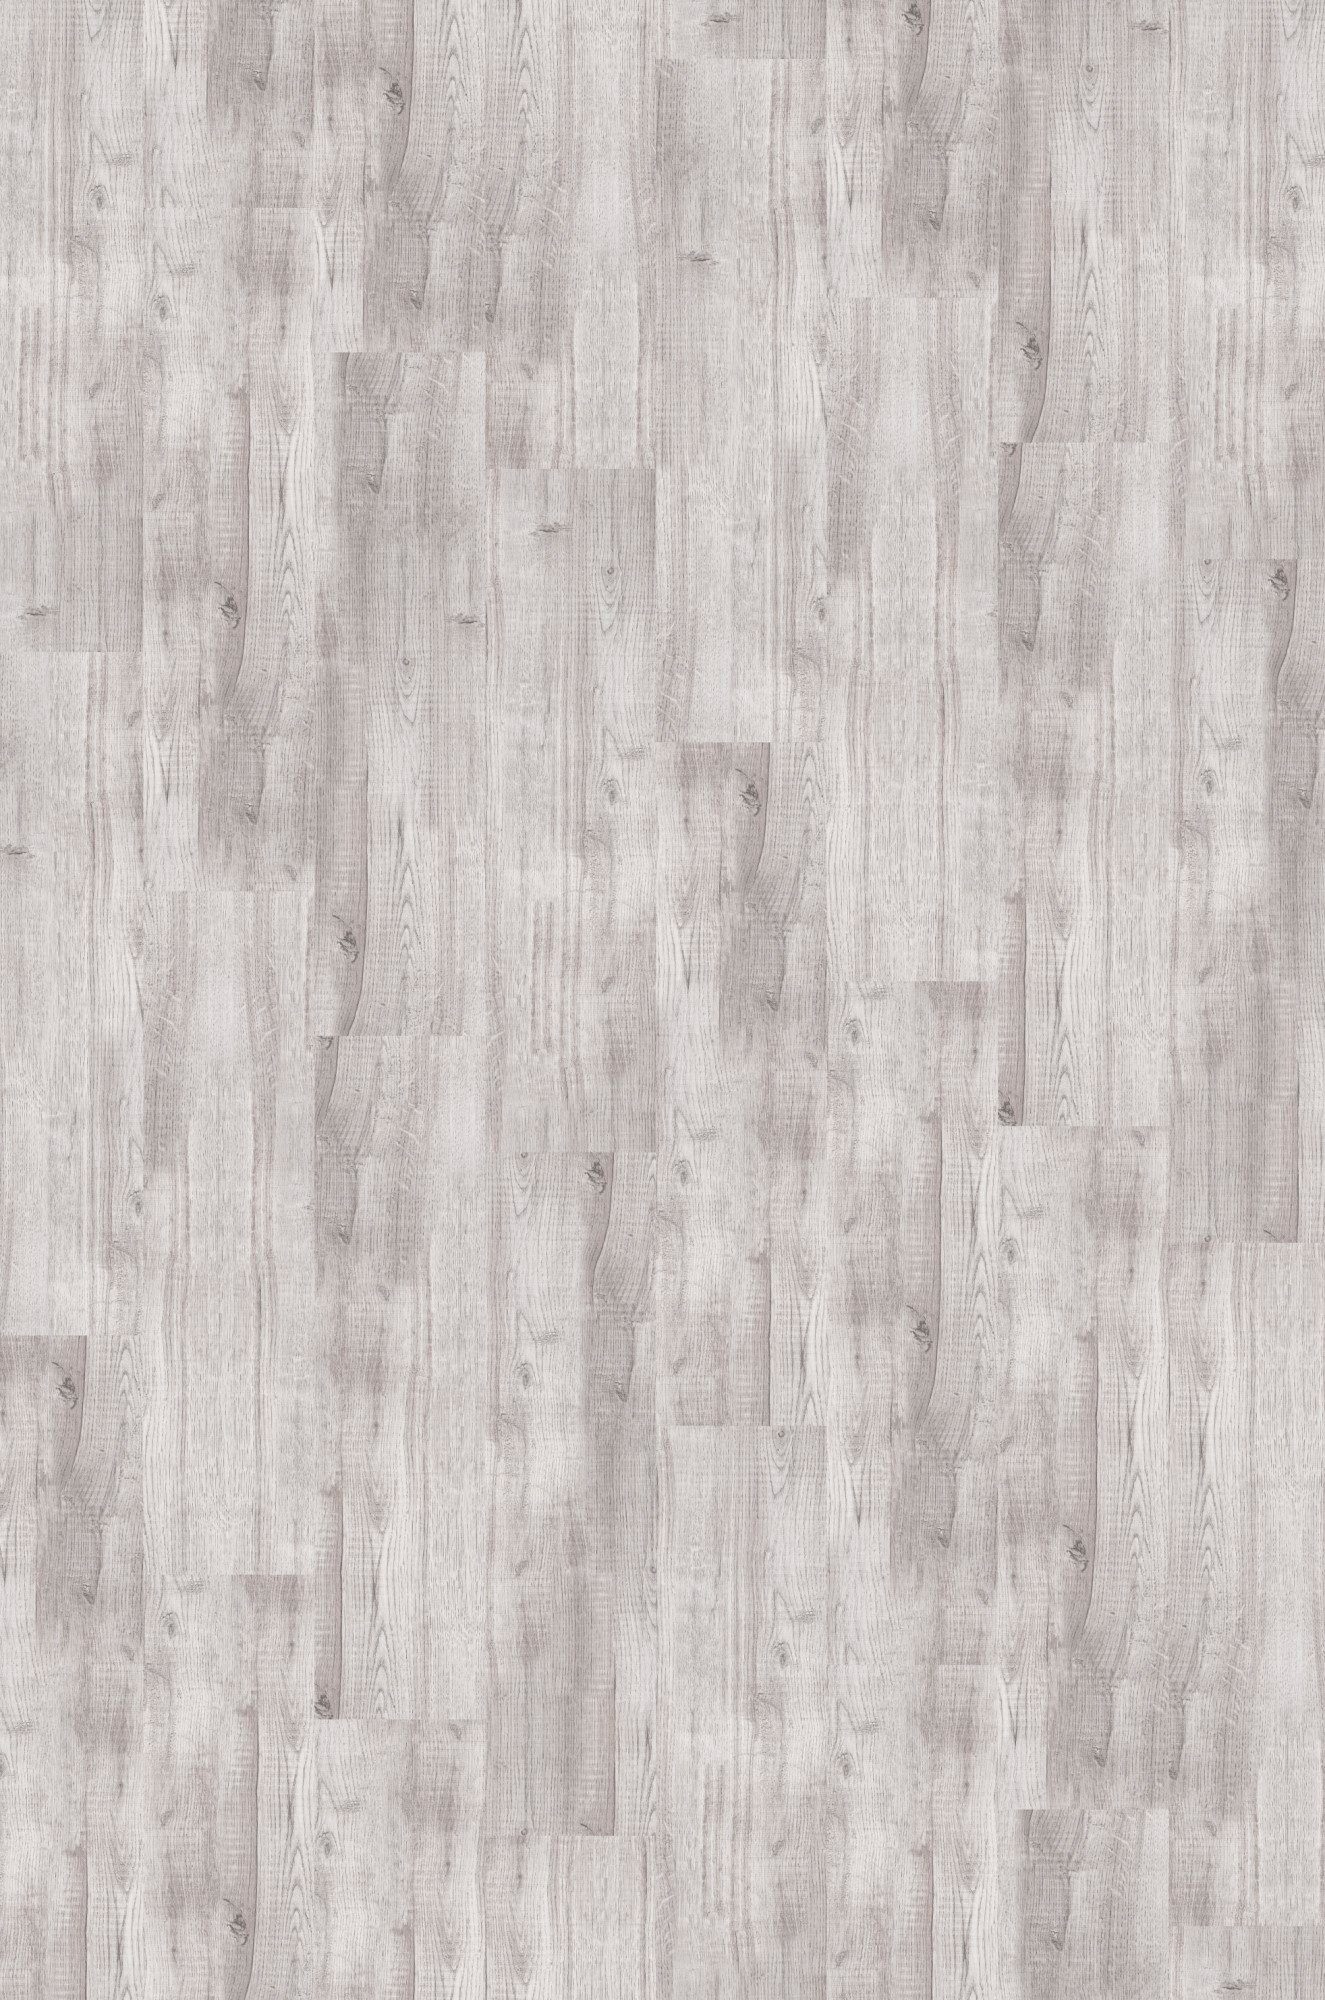 Verkaufsgeschäft Teppichfliese Velour 100 x 4 Holzoptik selbsthaftend, rechteckig, m², mm, Eiche 14 Stück, Stuhlrollen hell-grau, Höhe: 6 für 25 cm, geeignet Infloor